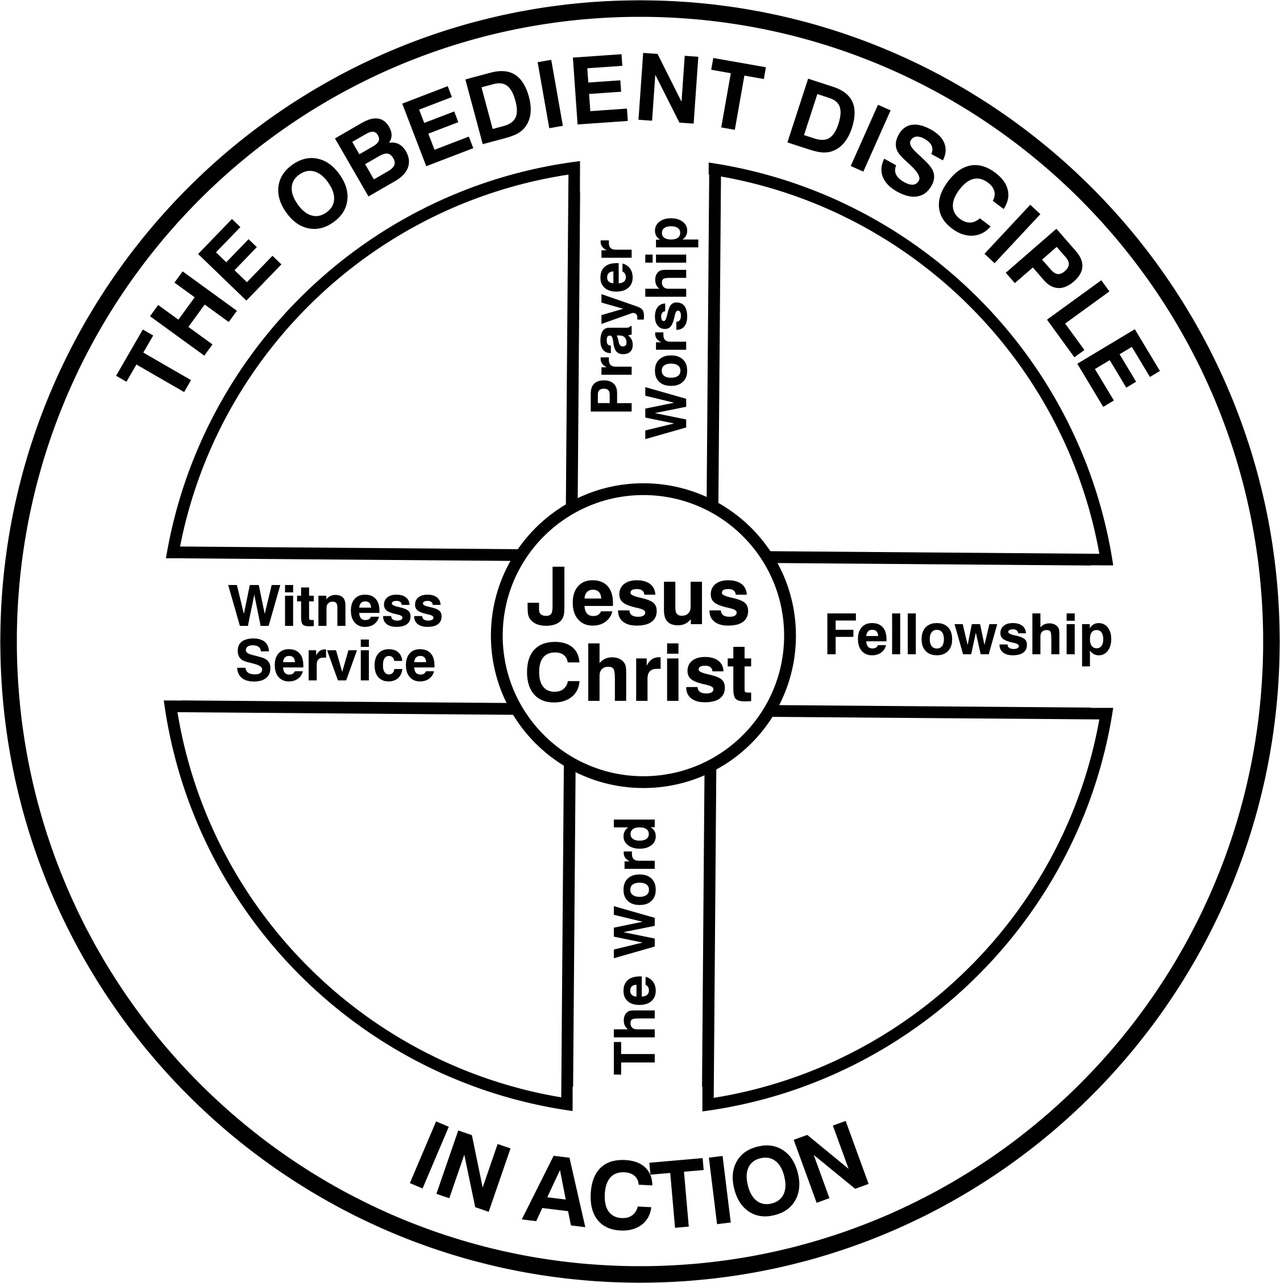 Dawson Trotman's Obedient Disciple Wheel